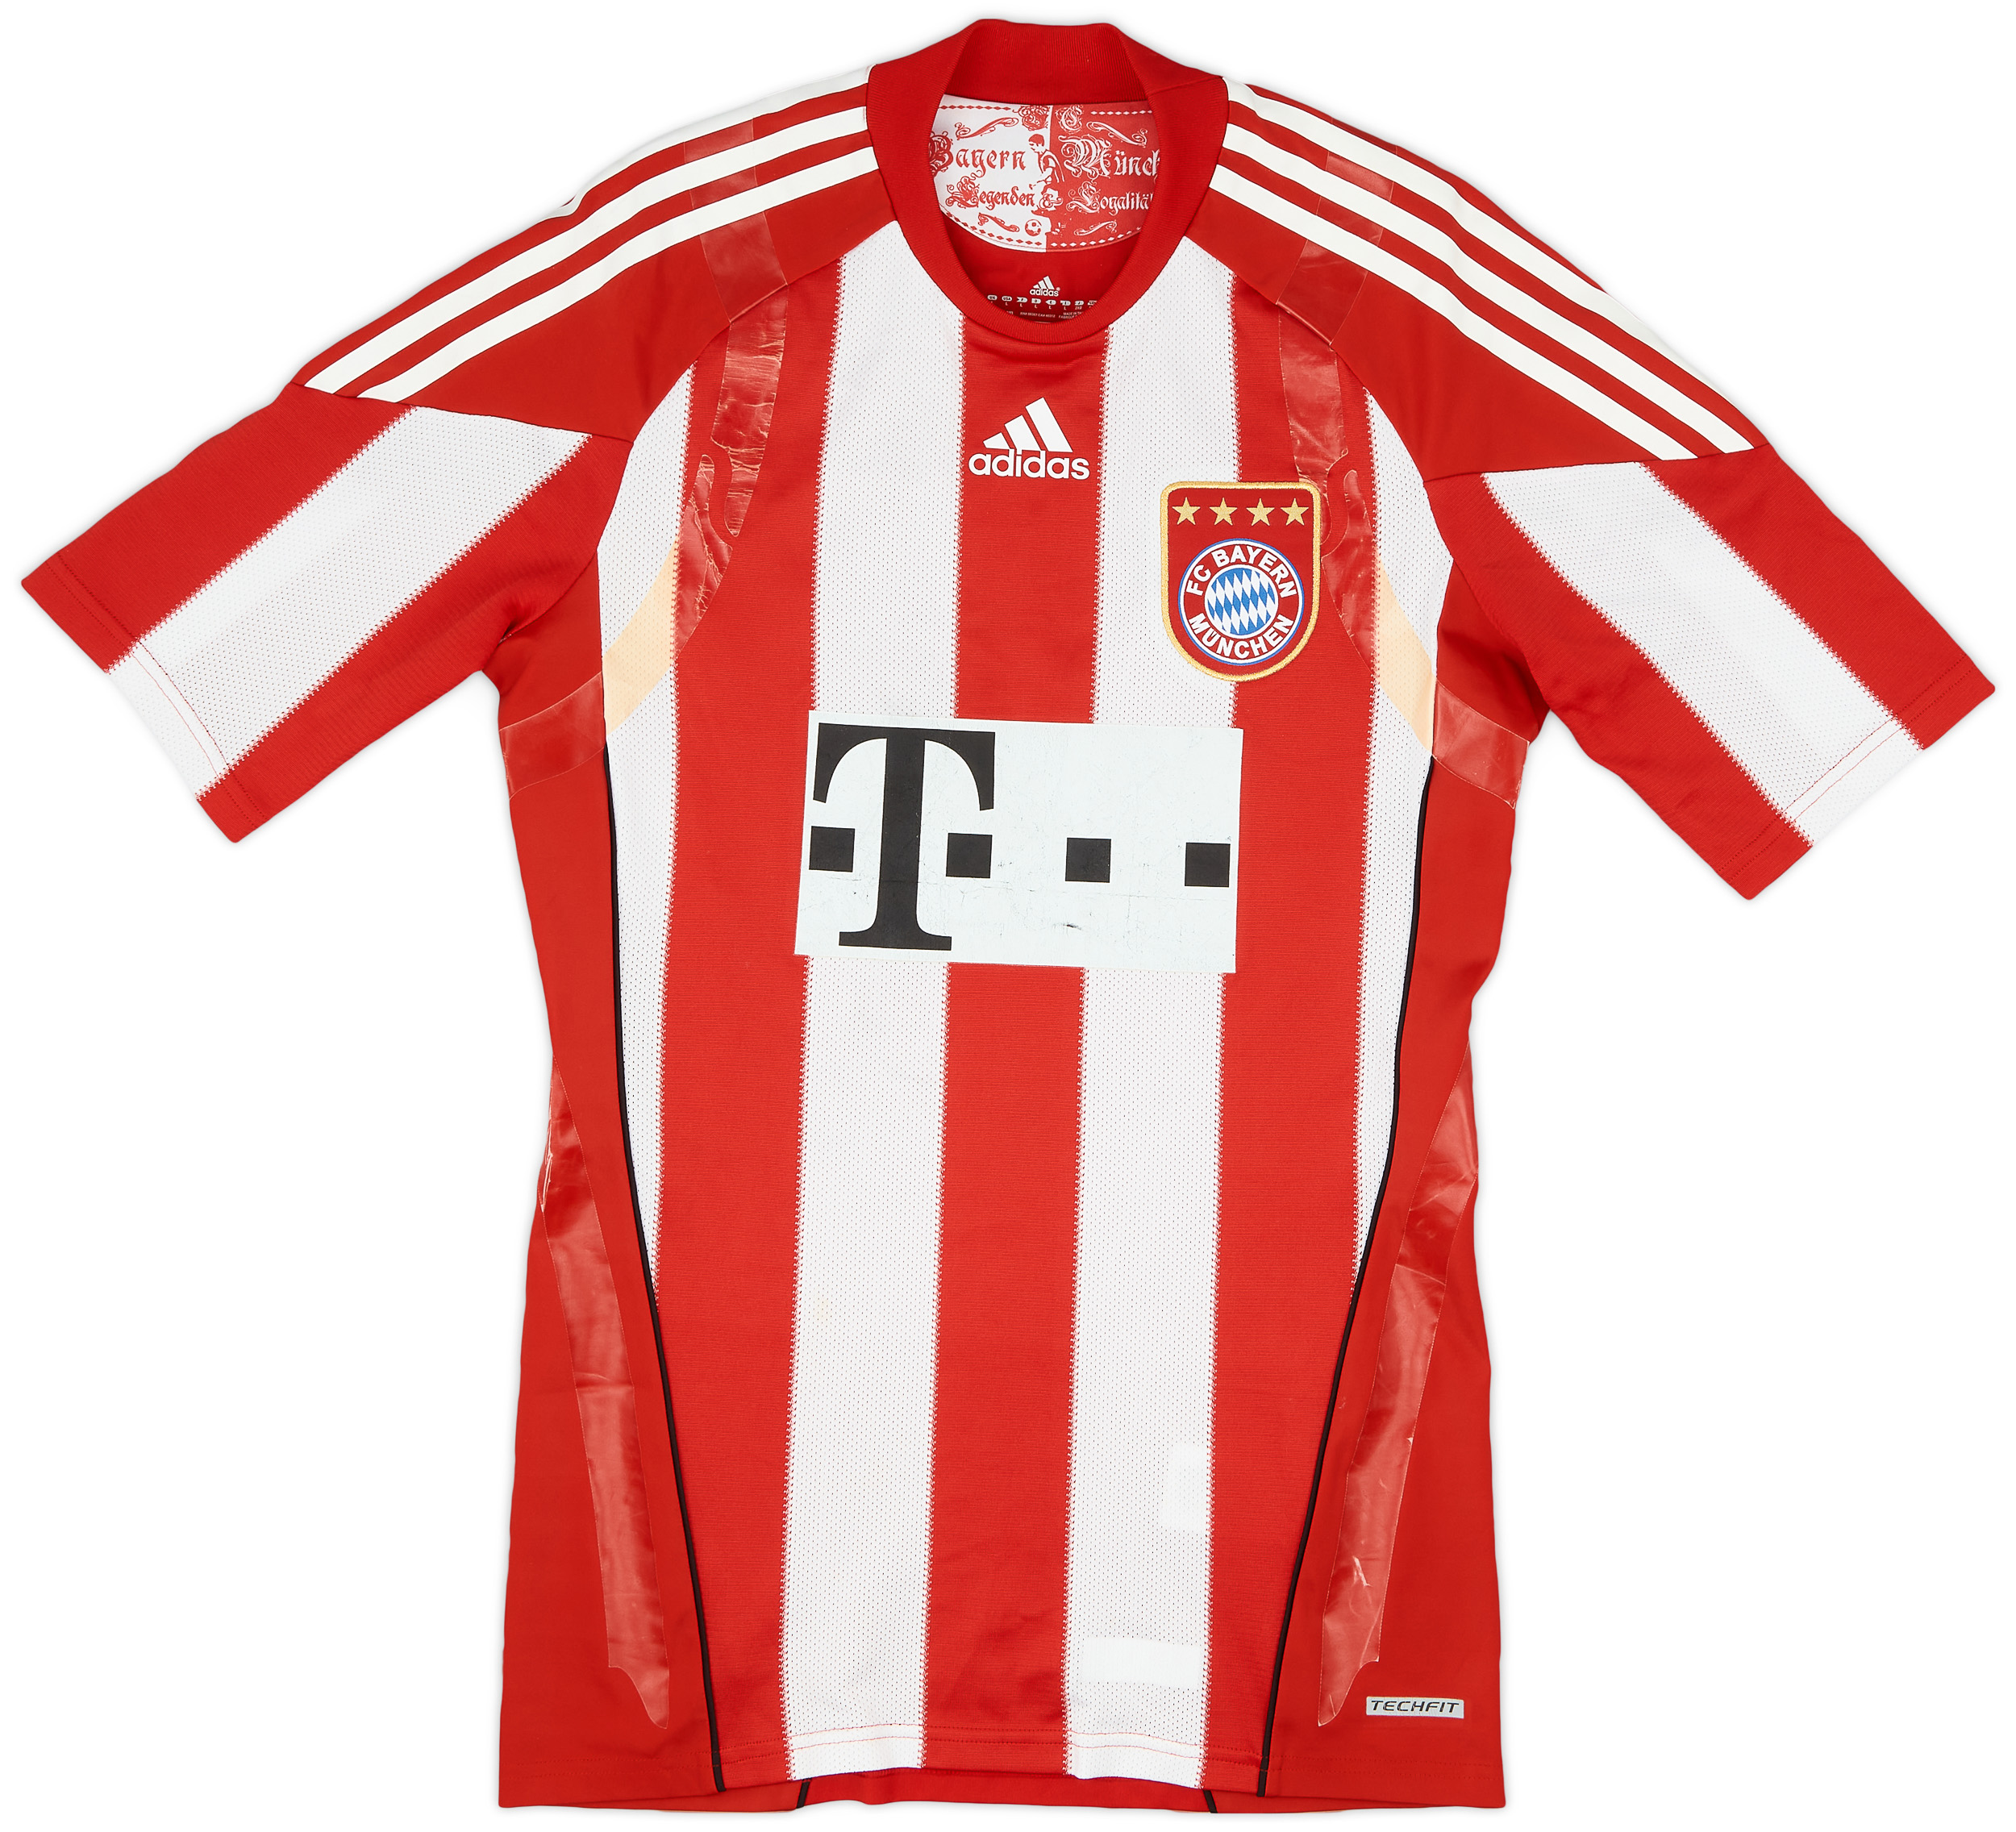 2010-11 Bayern Munich Player Issue Home Shirt - 6/10 - ()